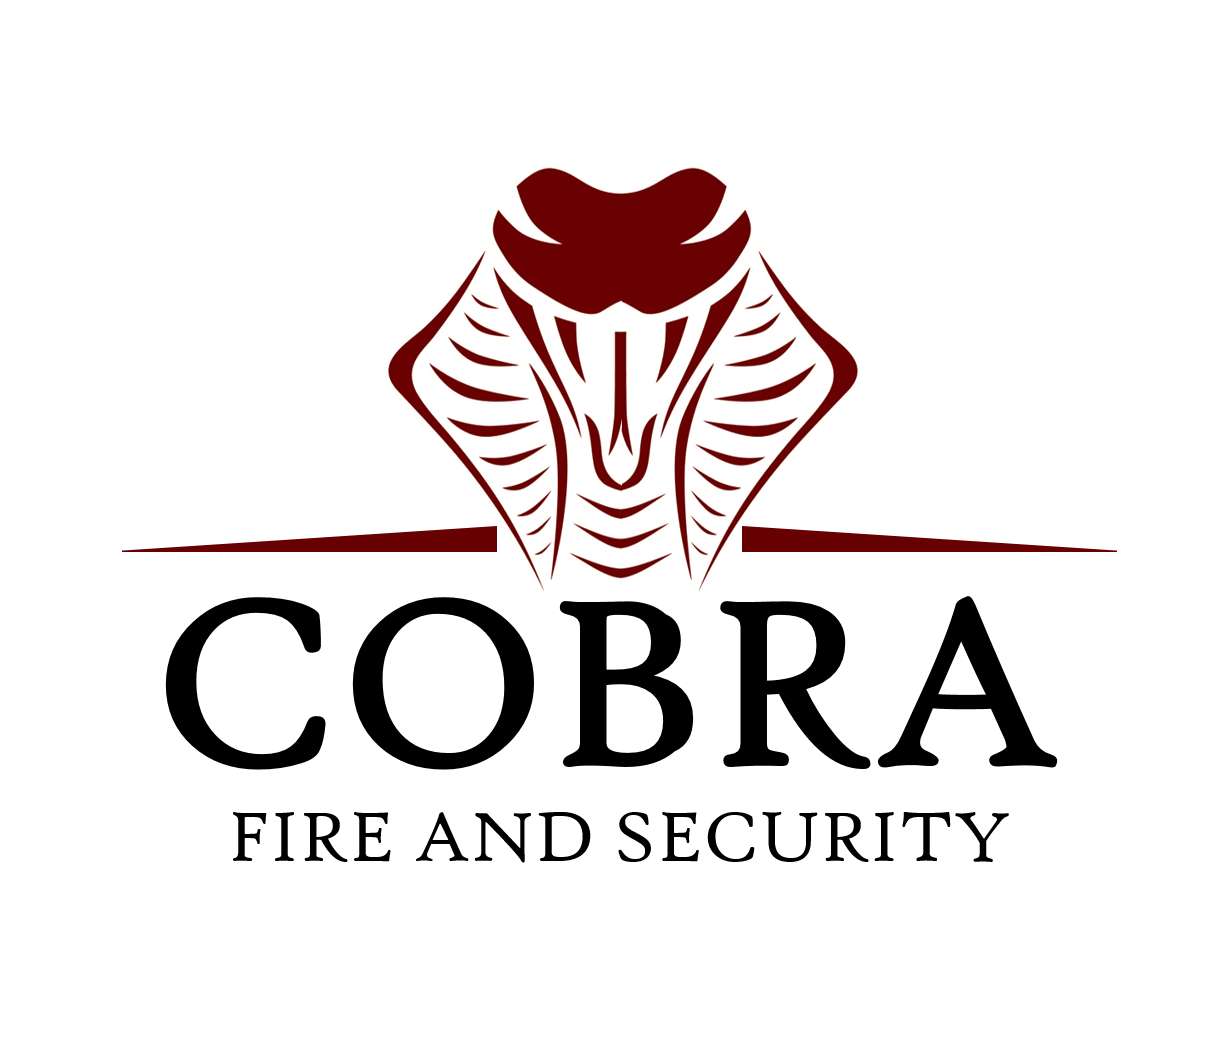 Cobra Fire and Security Ltd